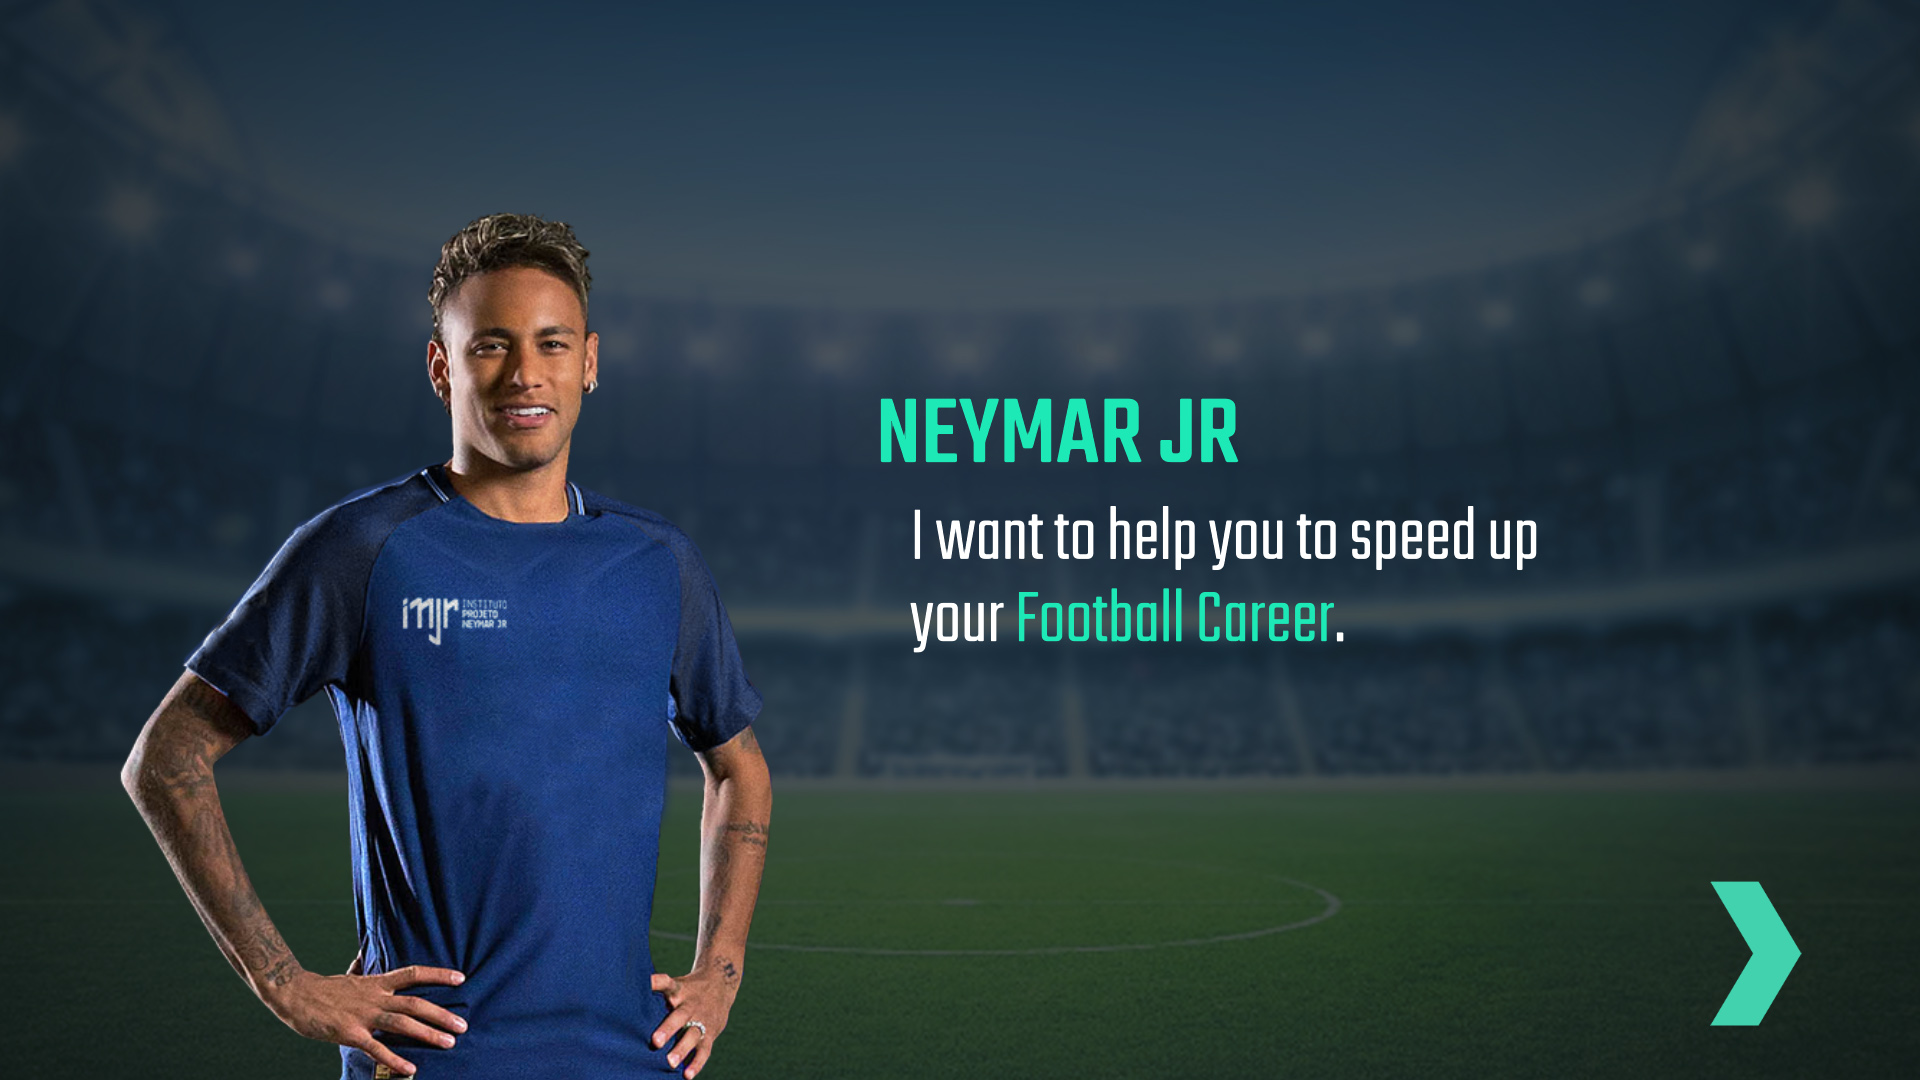 Neymar Jr in the game